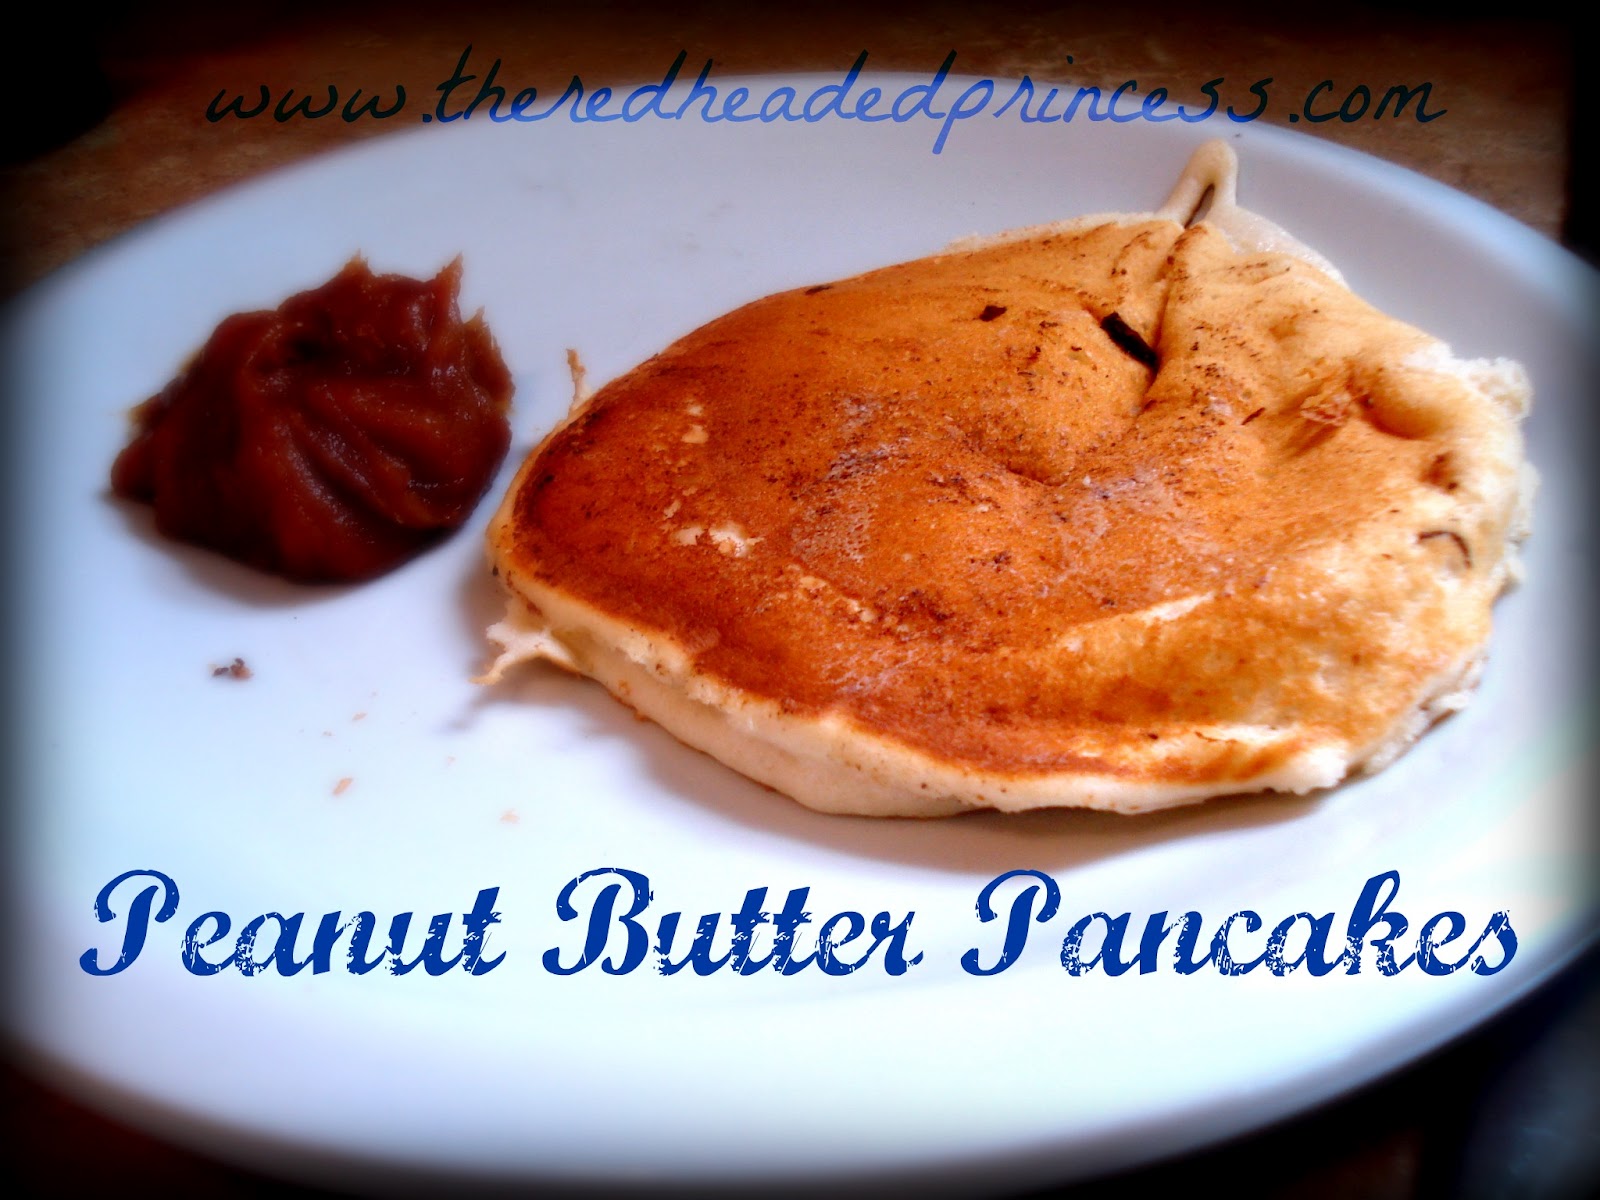 Peanut Butter Pancakes